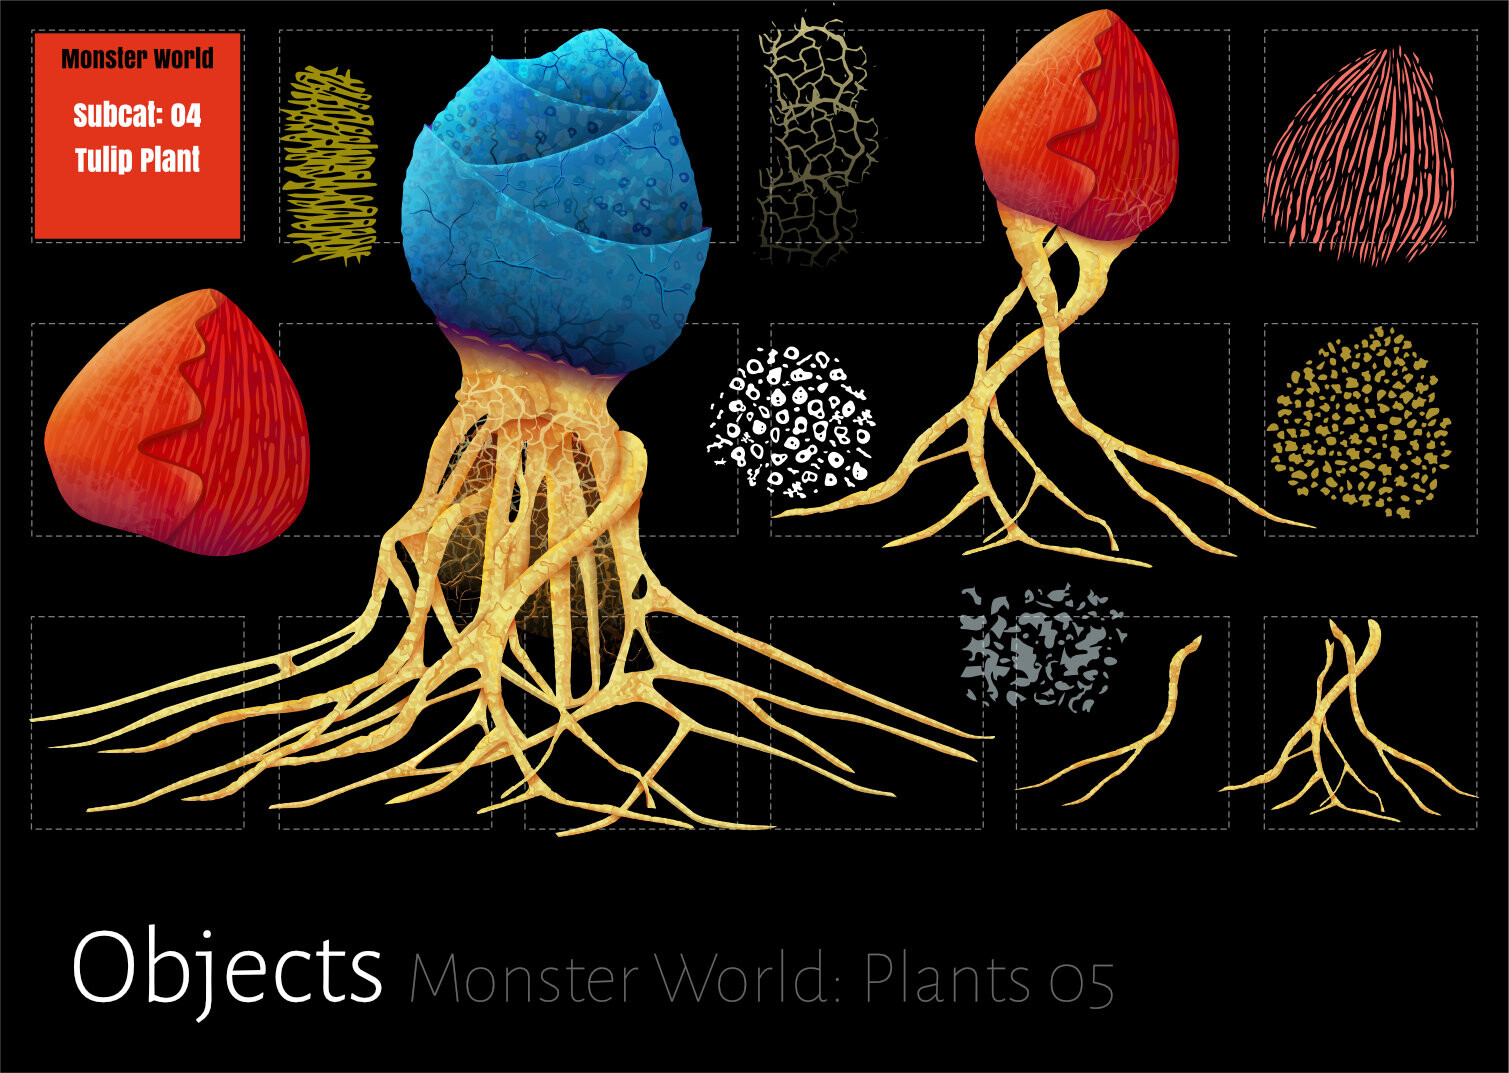 Monster World Assets: Tulip Plant